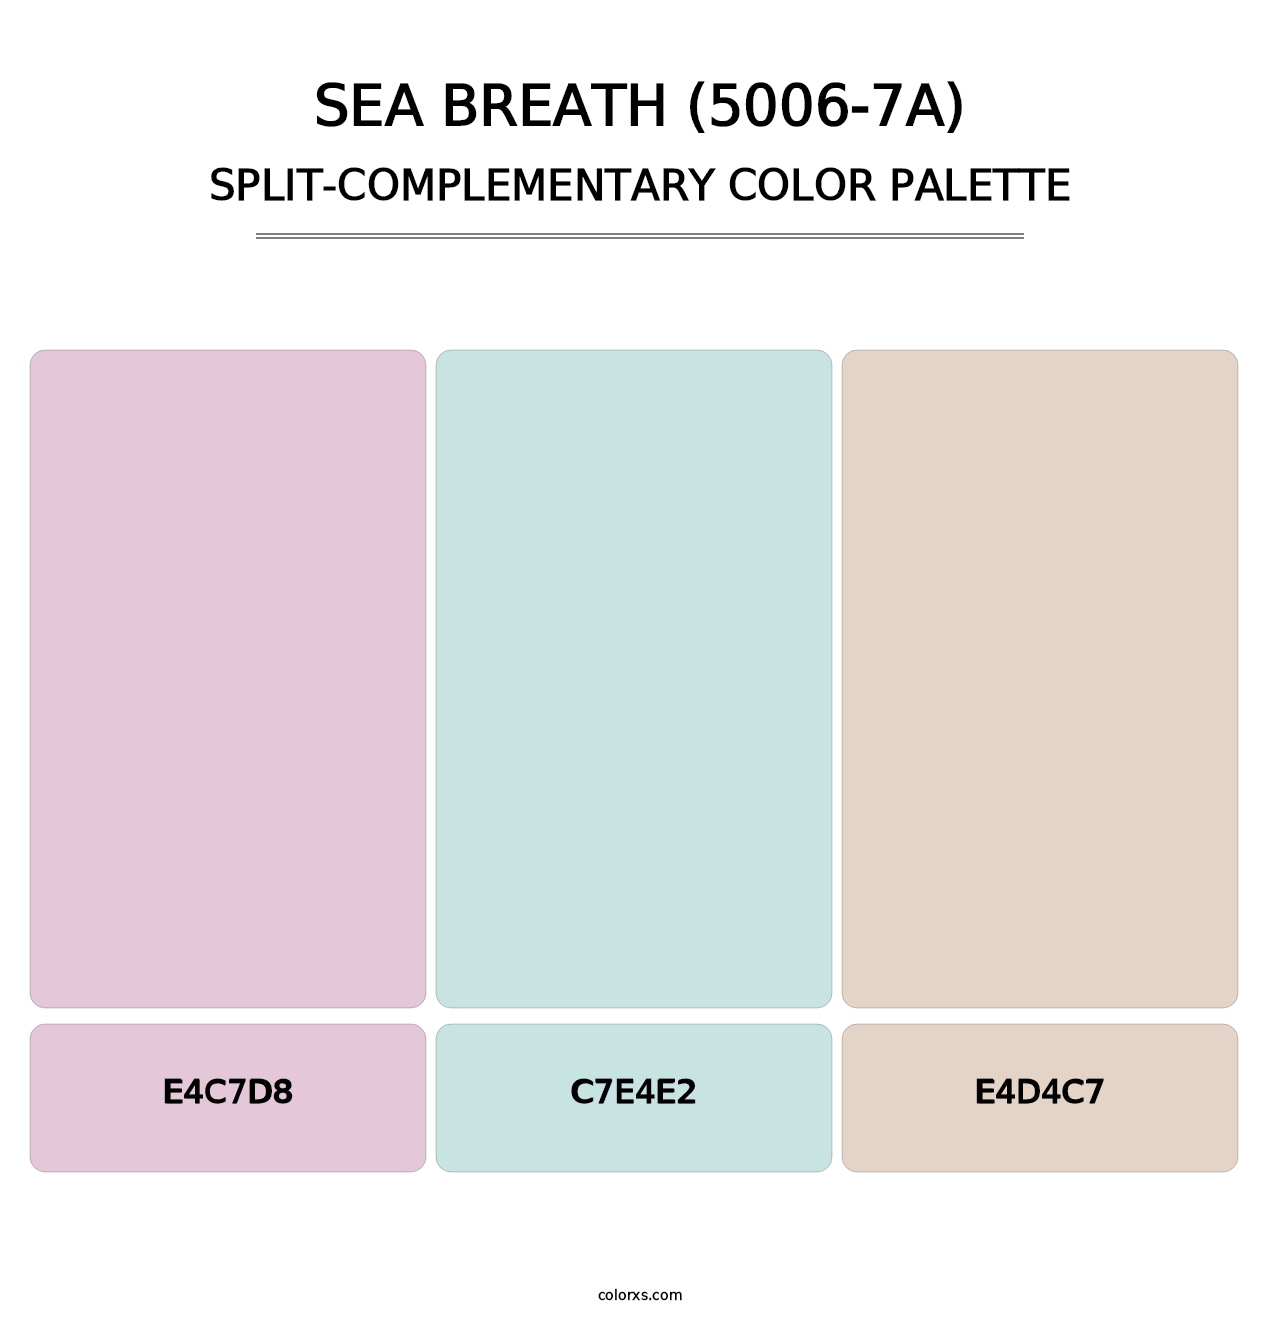 Sea Breath (5006-7A) - Split-Complementary Color Palette